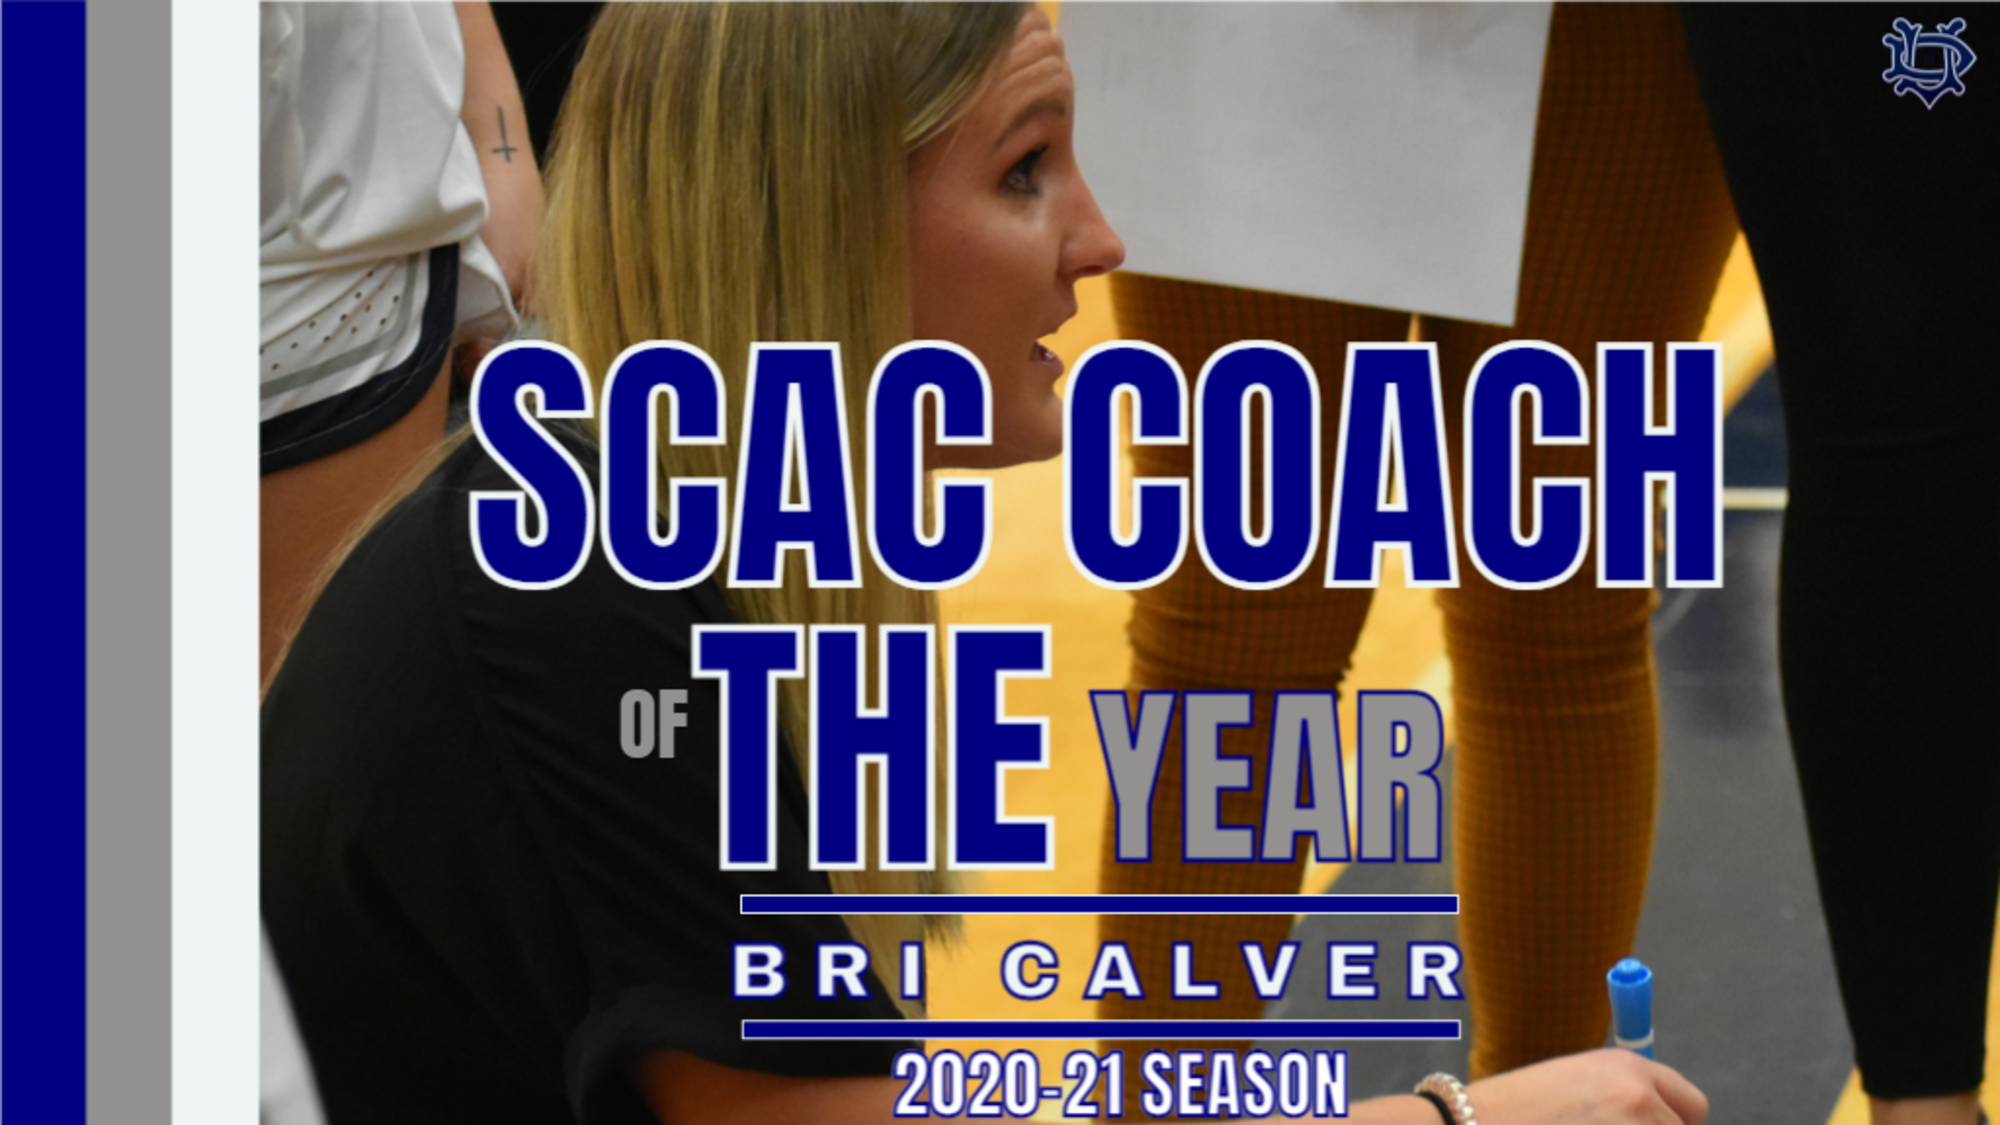 Calver Selected SCAC Women's Basketball Coach of the Year